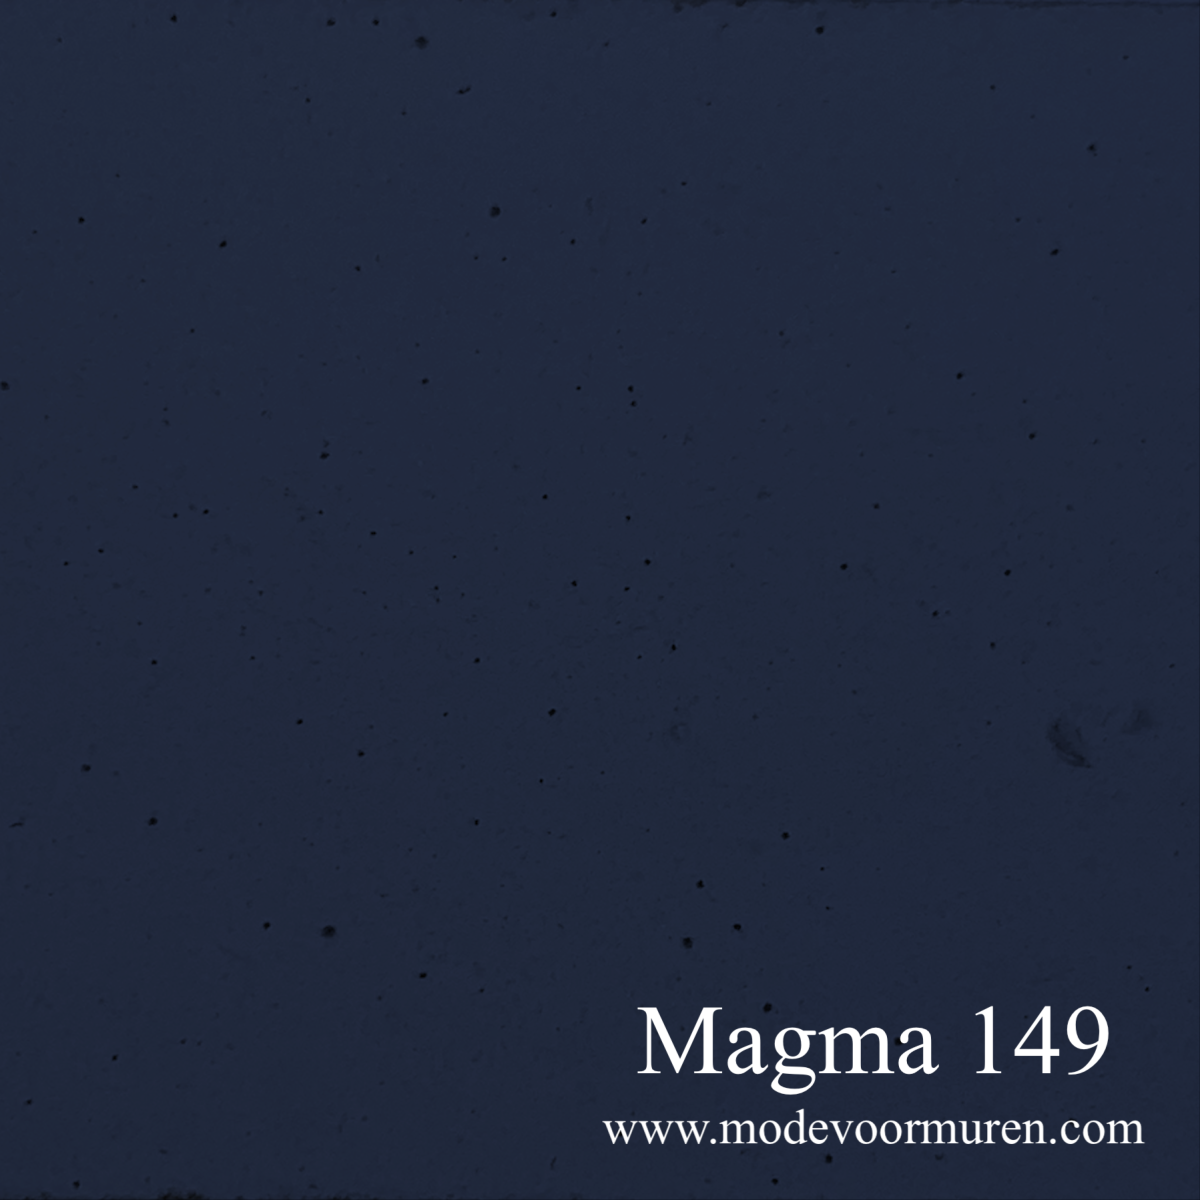 Kalei kleurtester "Magma 149" Stoopen en Meeus